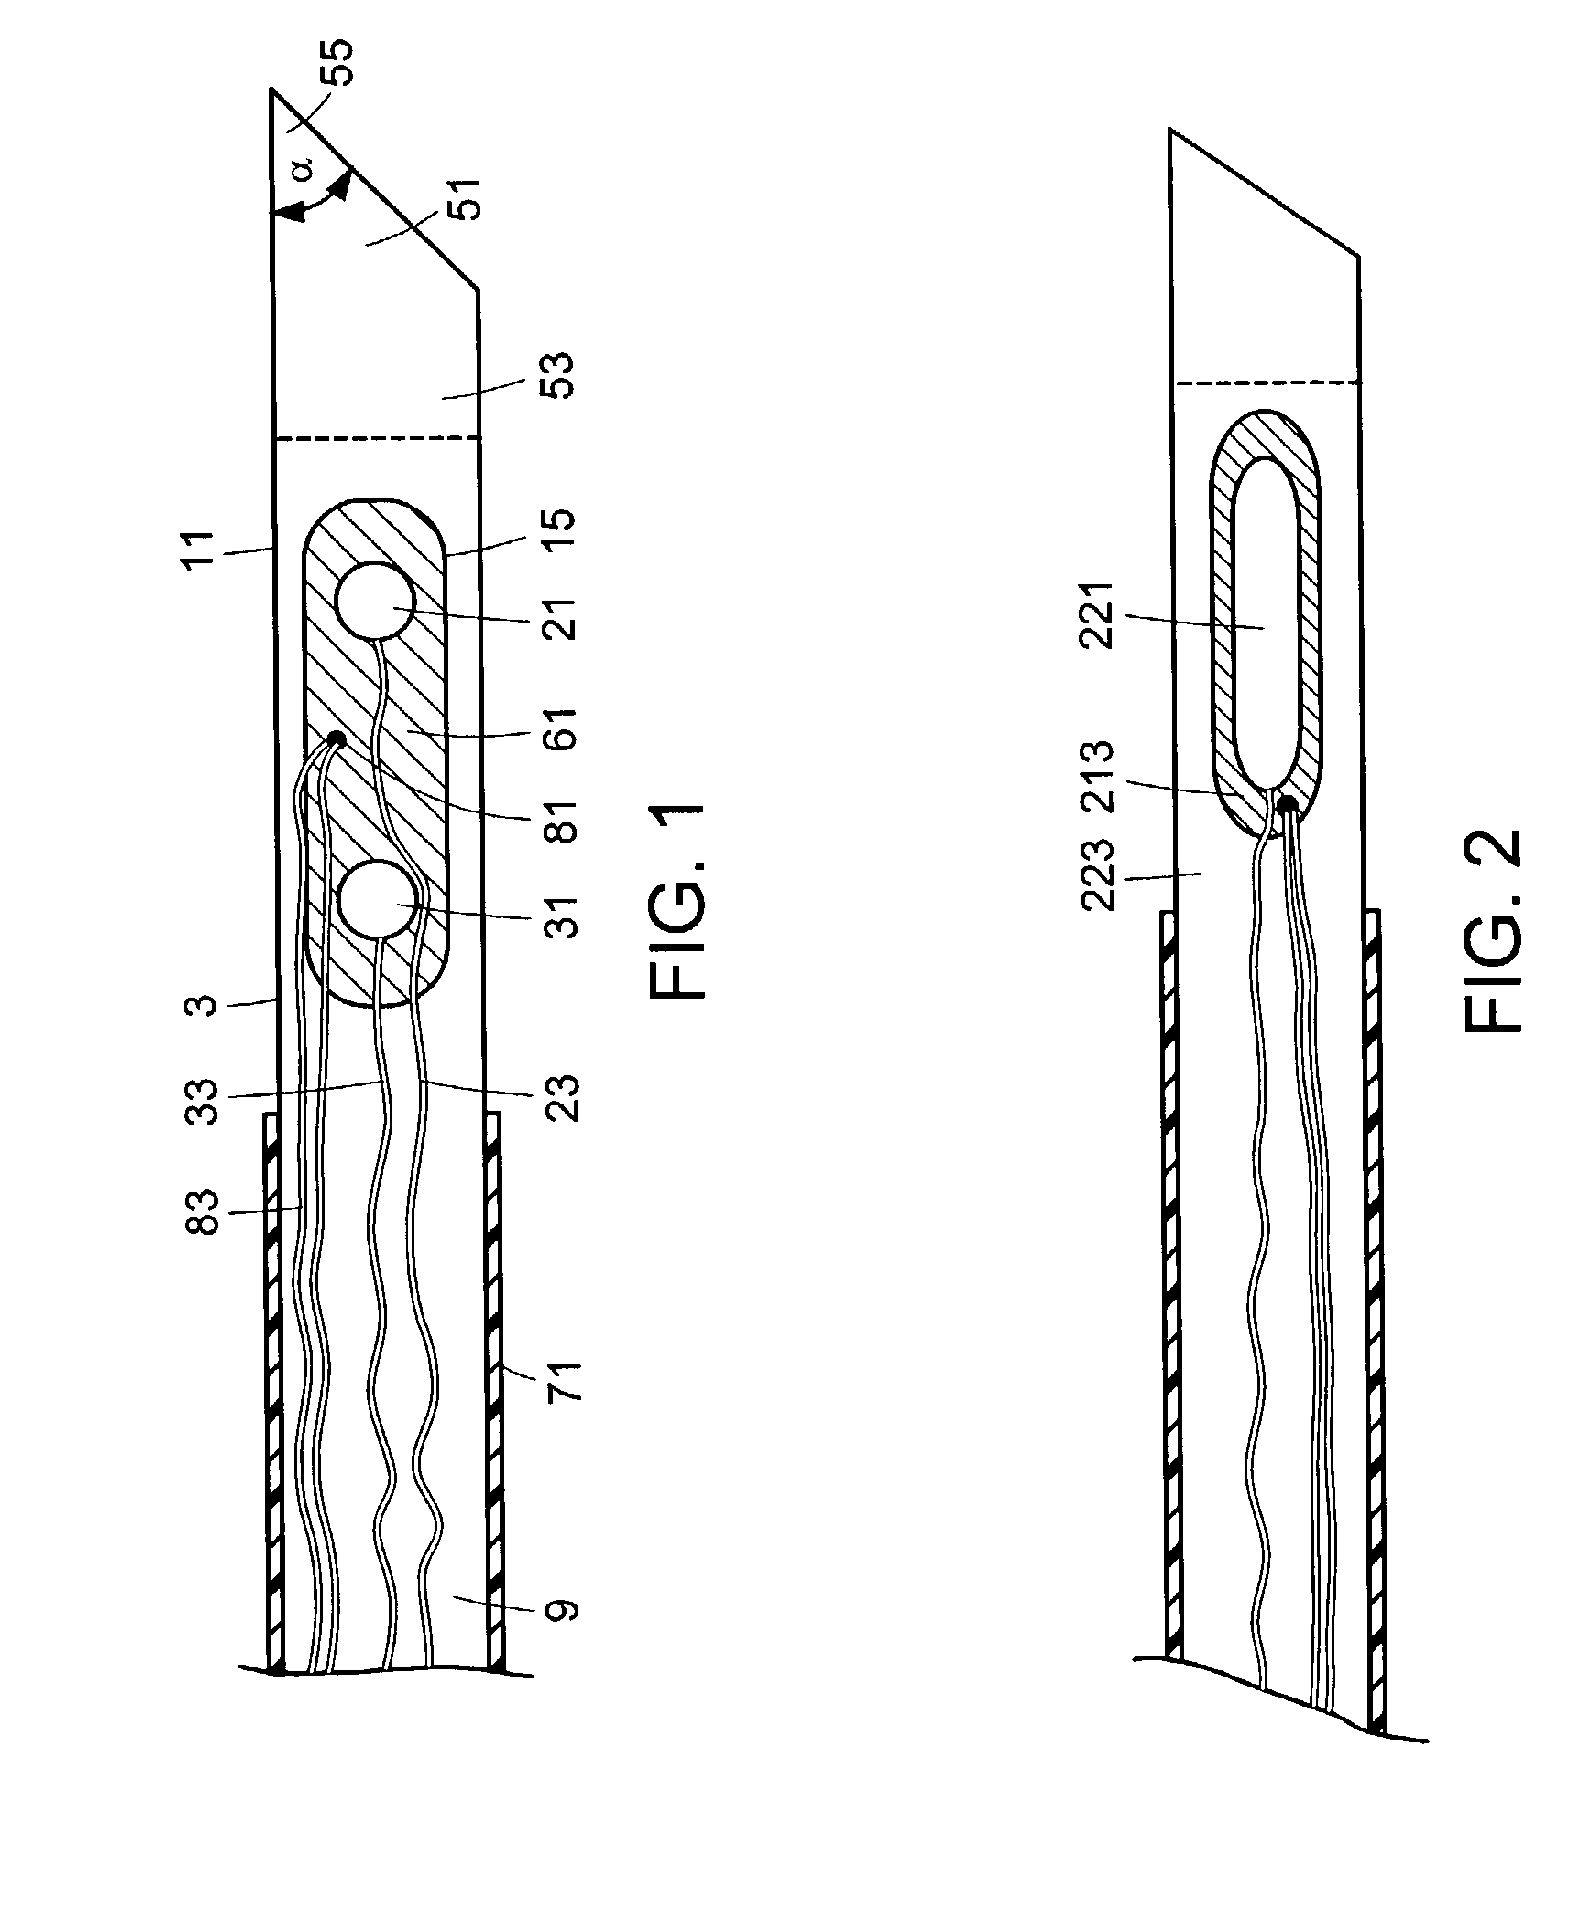 Windowed thermal ablation probe